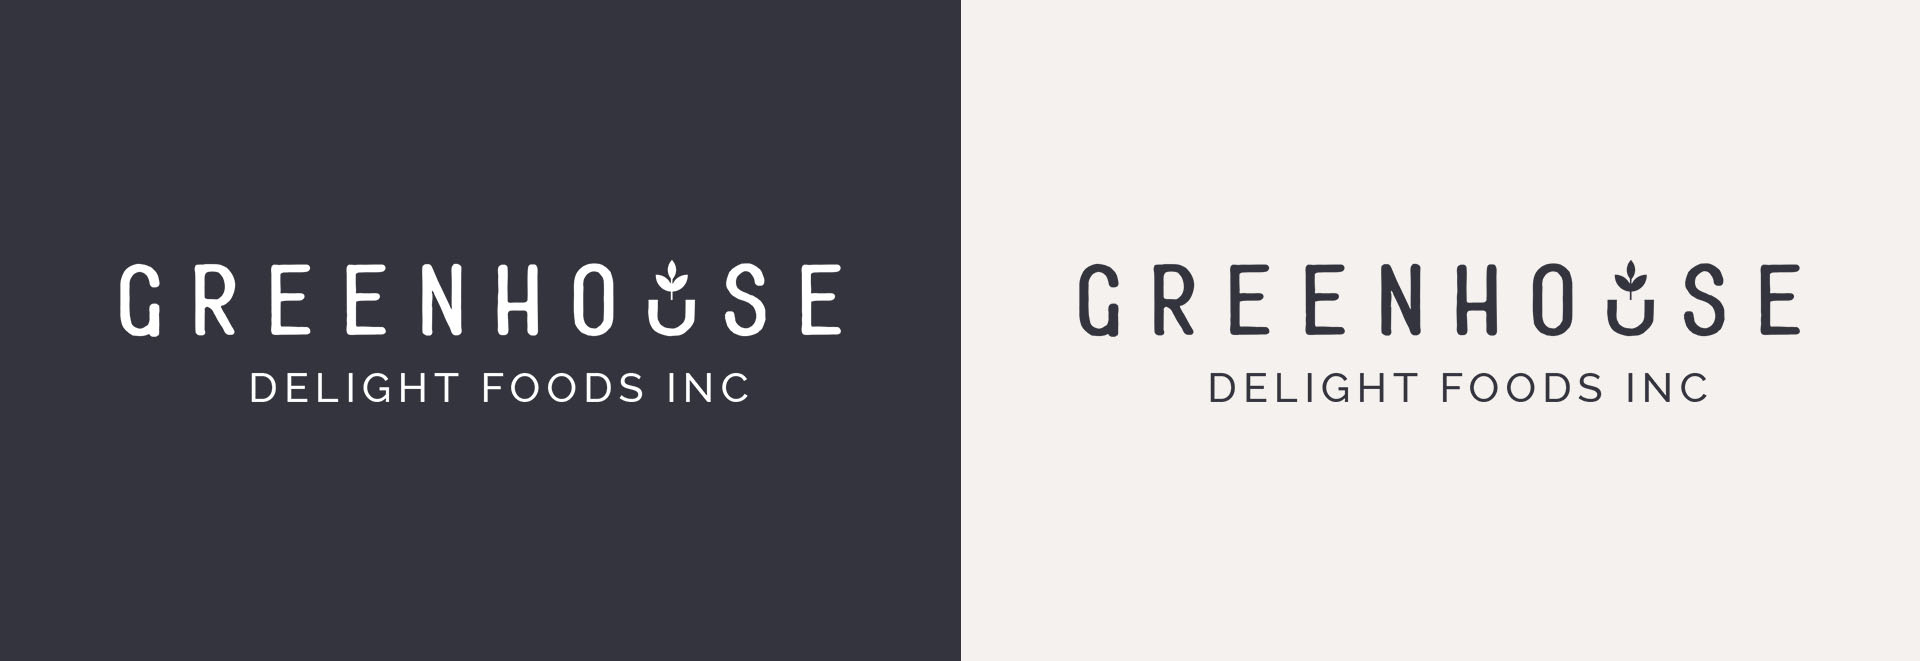 Greenhouse logo black and white